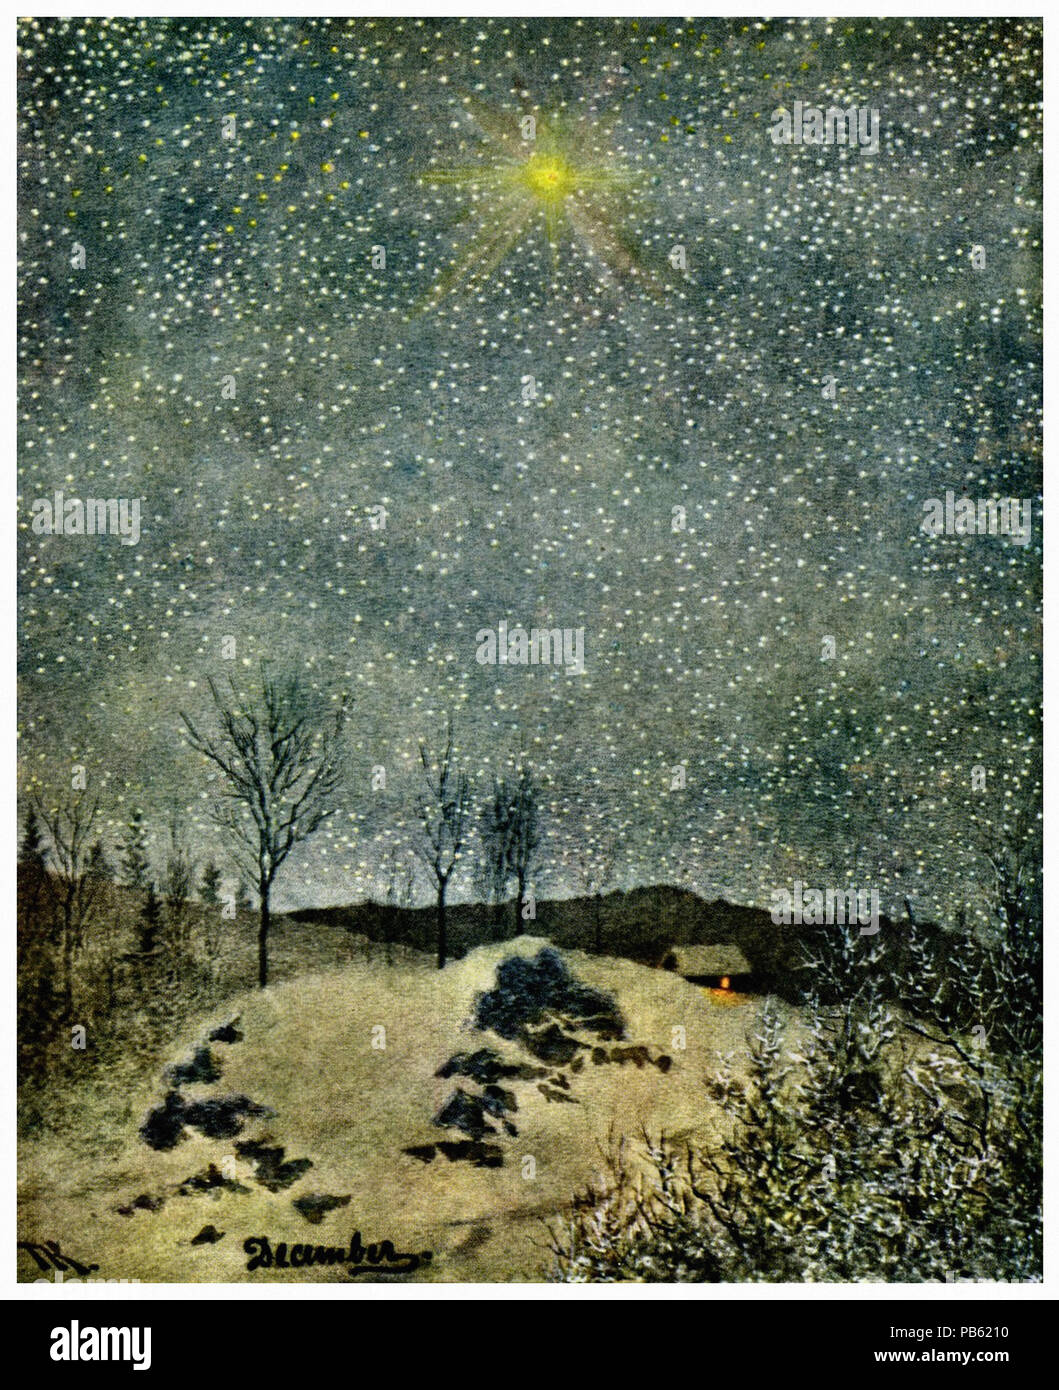 Kittelsen  Theodor - Months of the Year 12 - December Stock Photo